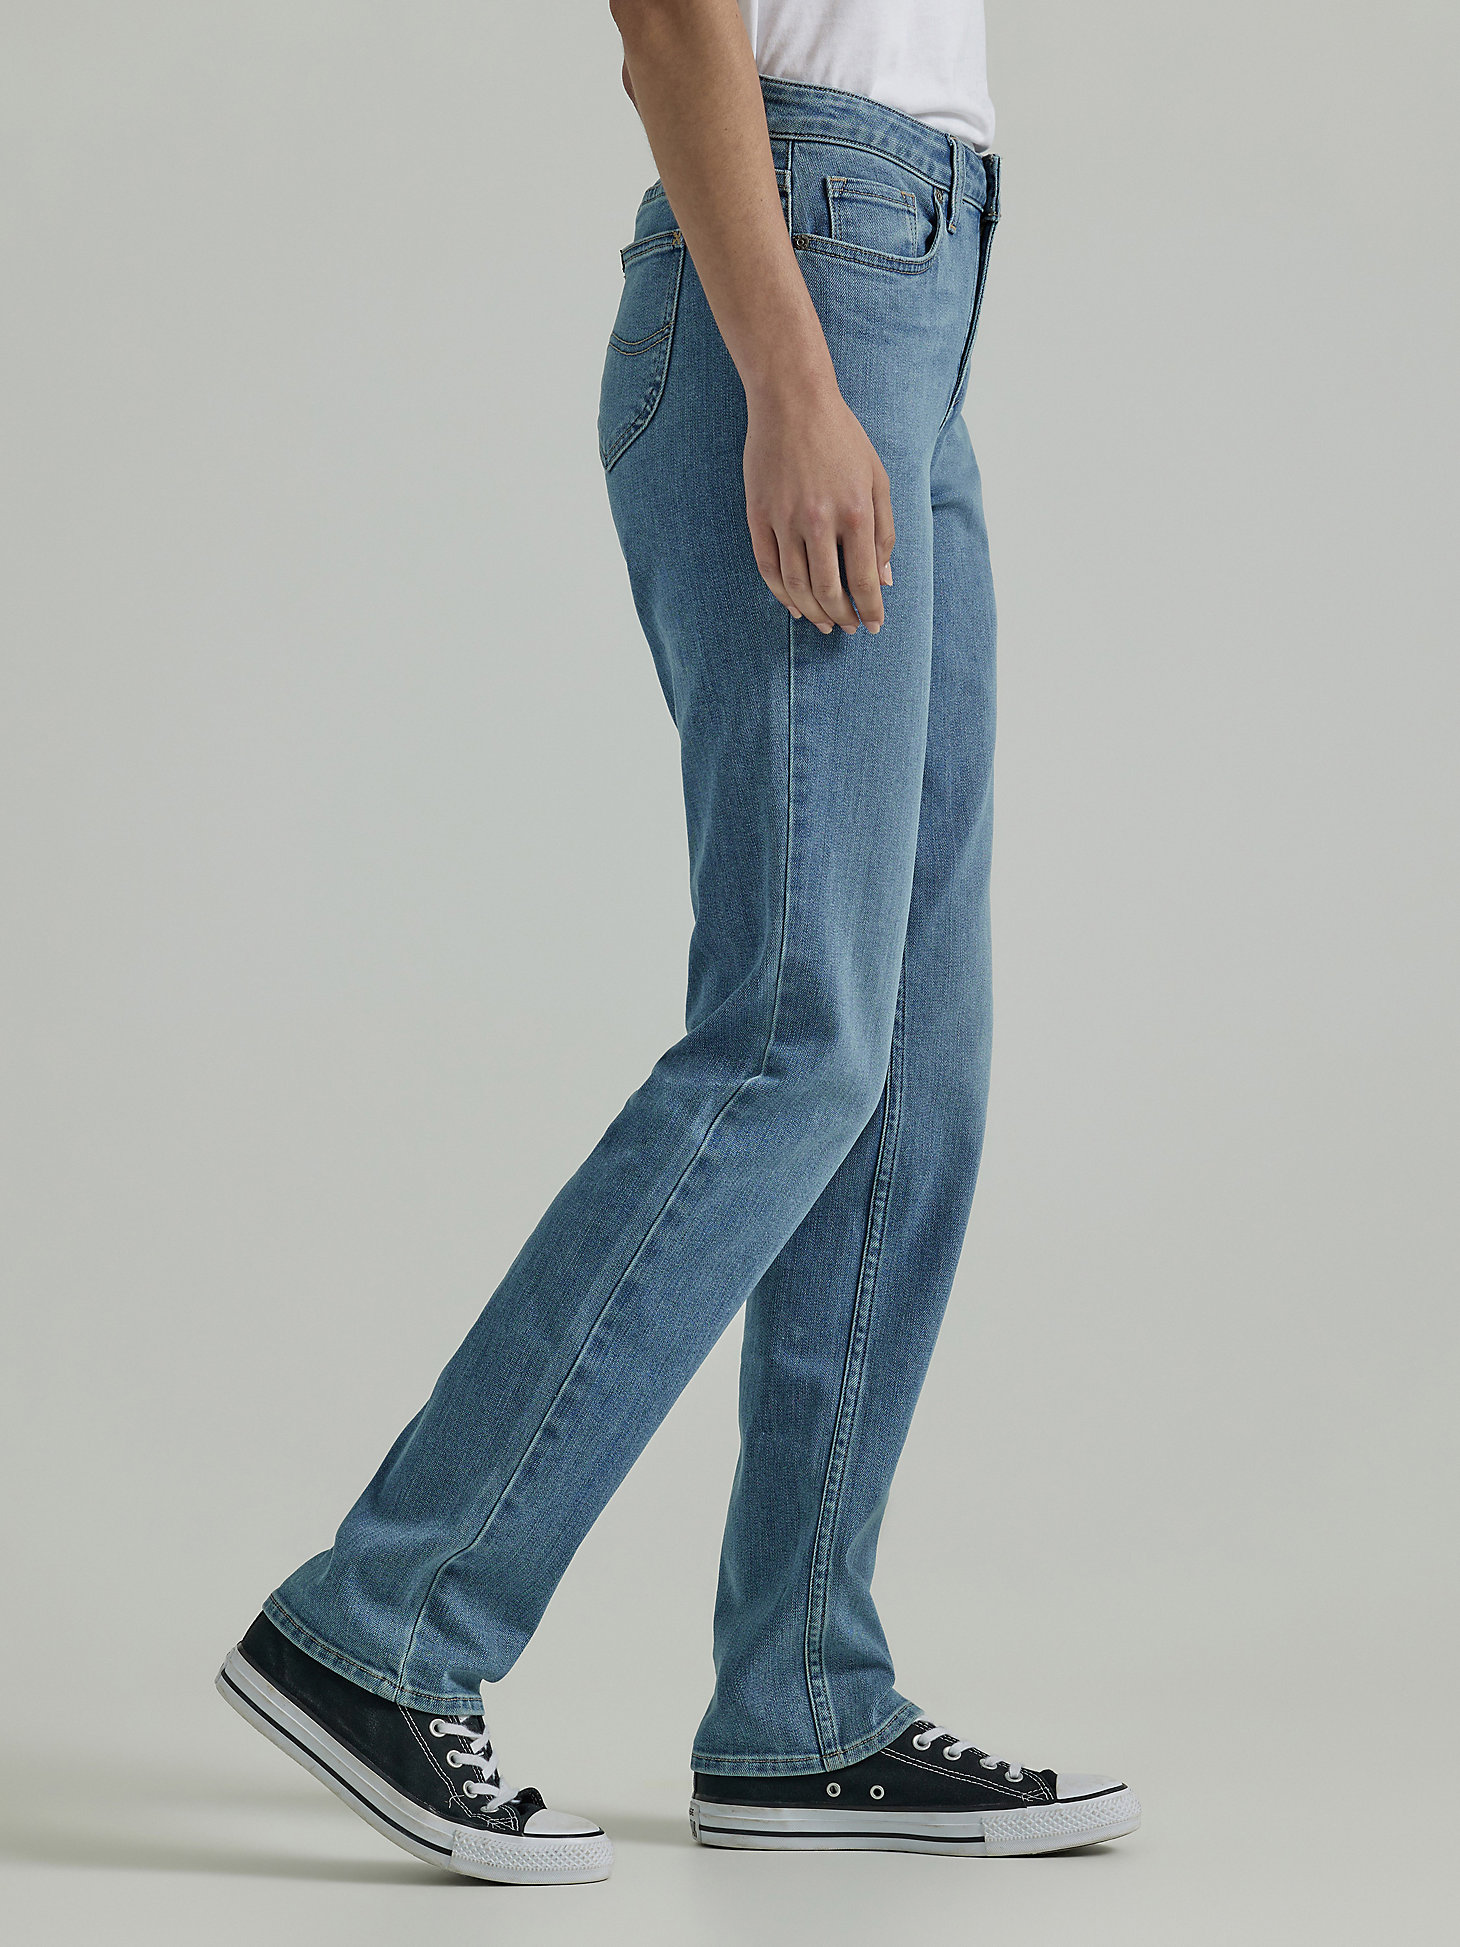 Women's Legendary Regular Straight Jean in With Purpose Blue alternative view 3